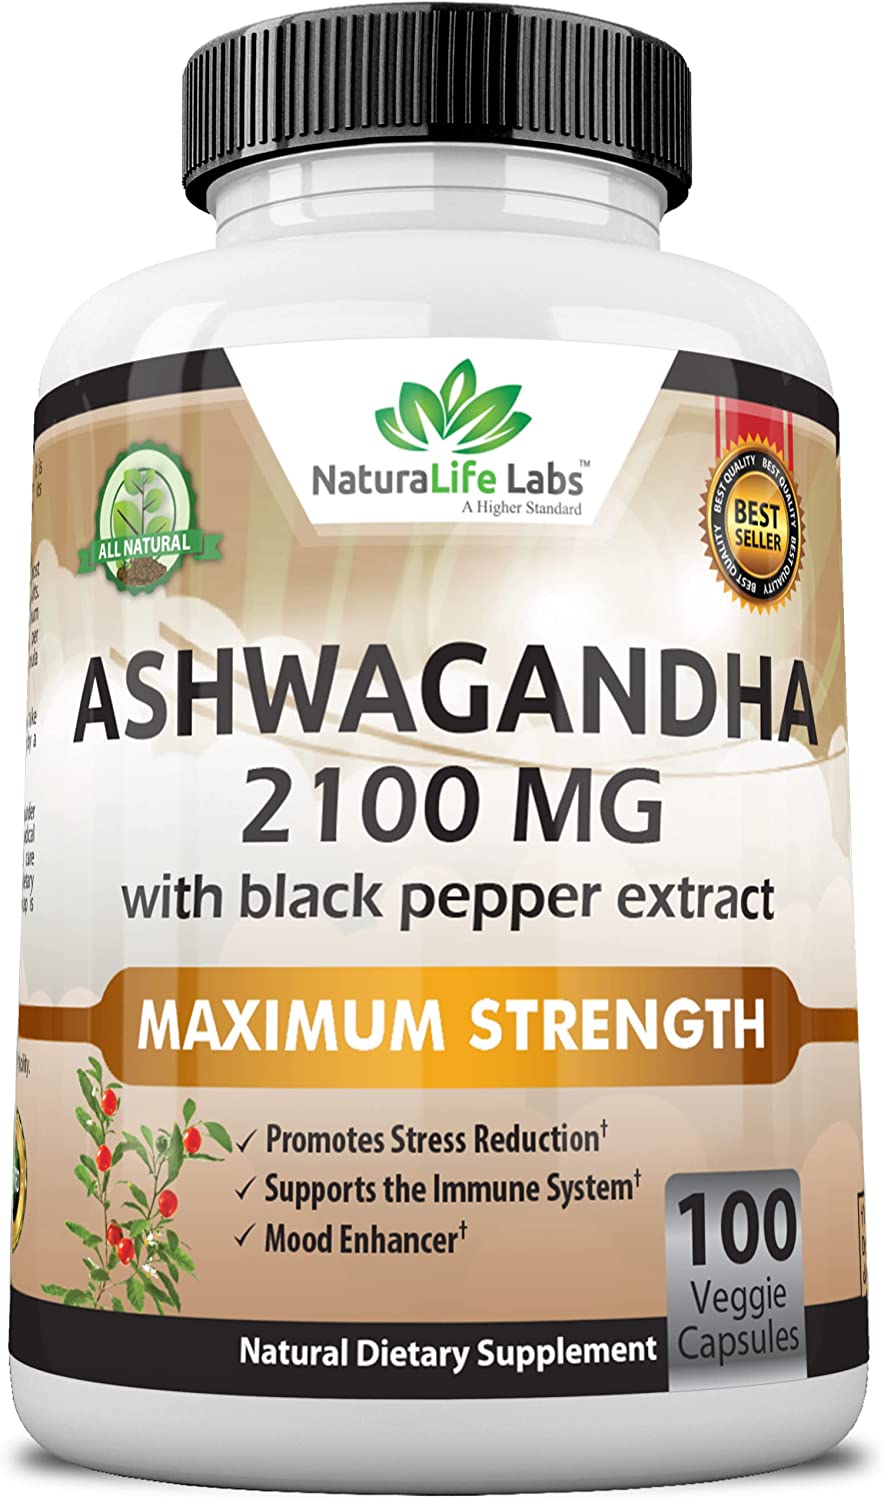 Ashwagandha Supplements To Reduce Anxiety